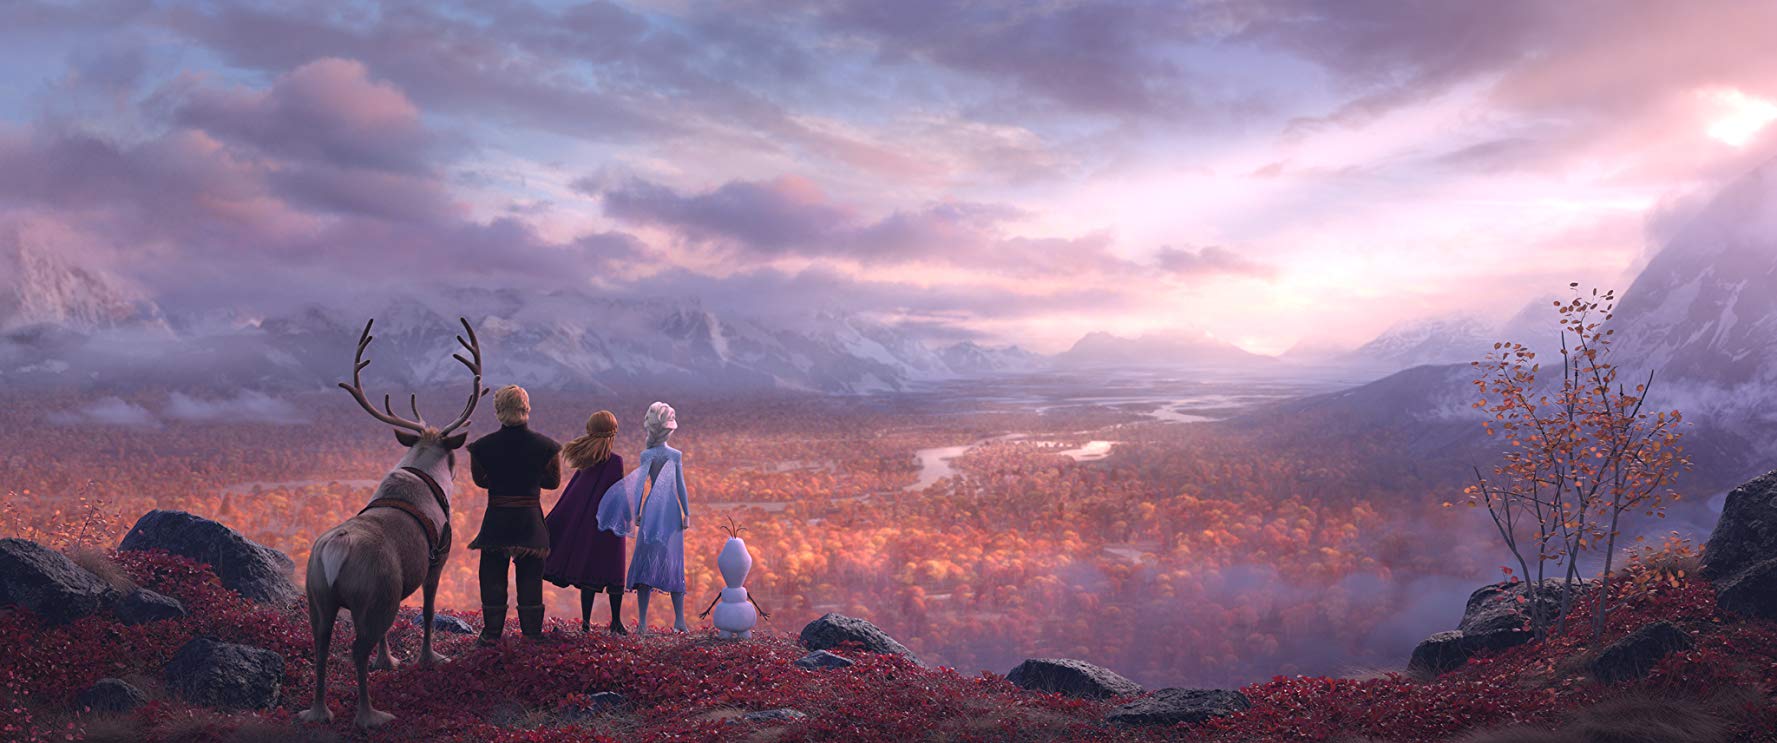 Frozen 3: Will Disney announce its making & release date in 2022?